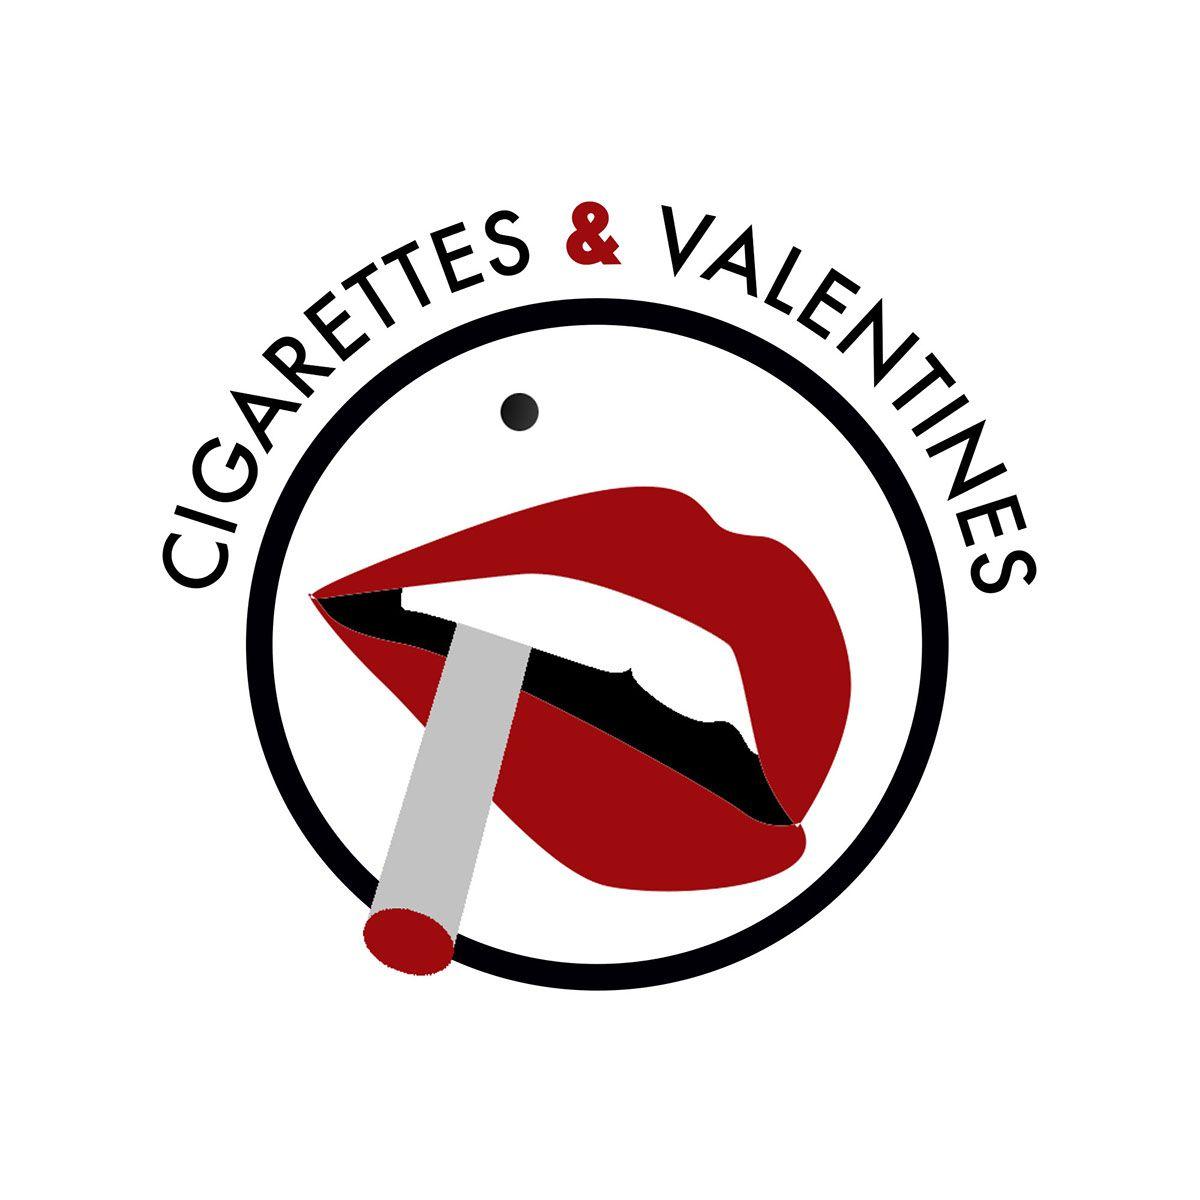 Cigarettes Logo - Cigarettes and Valentines Podcast Logo on Behance